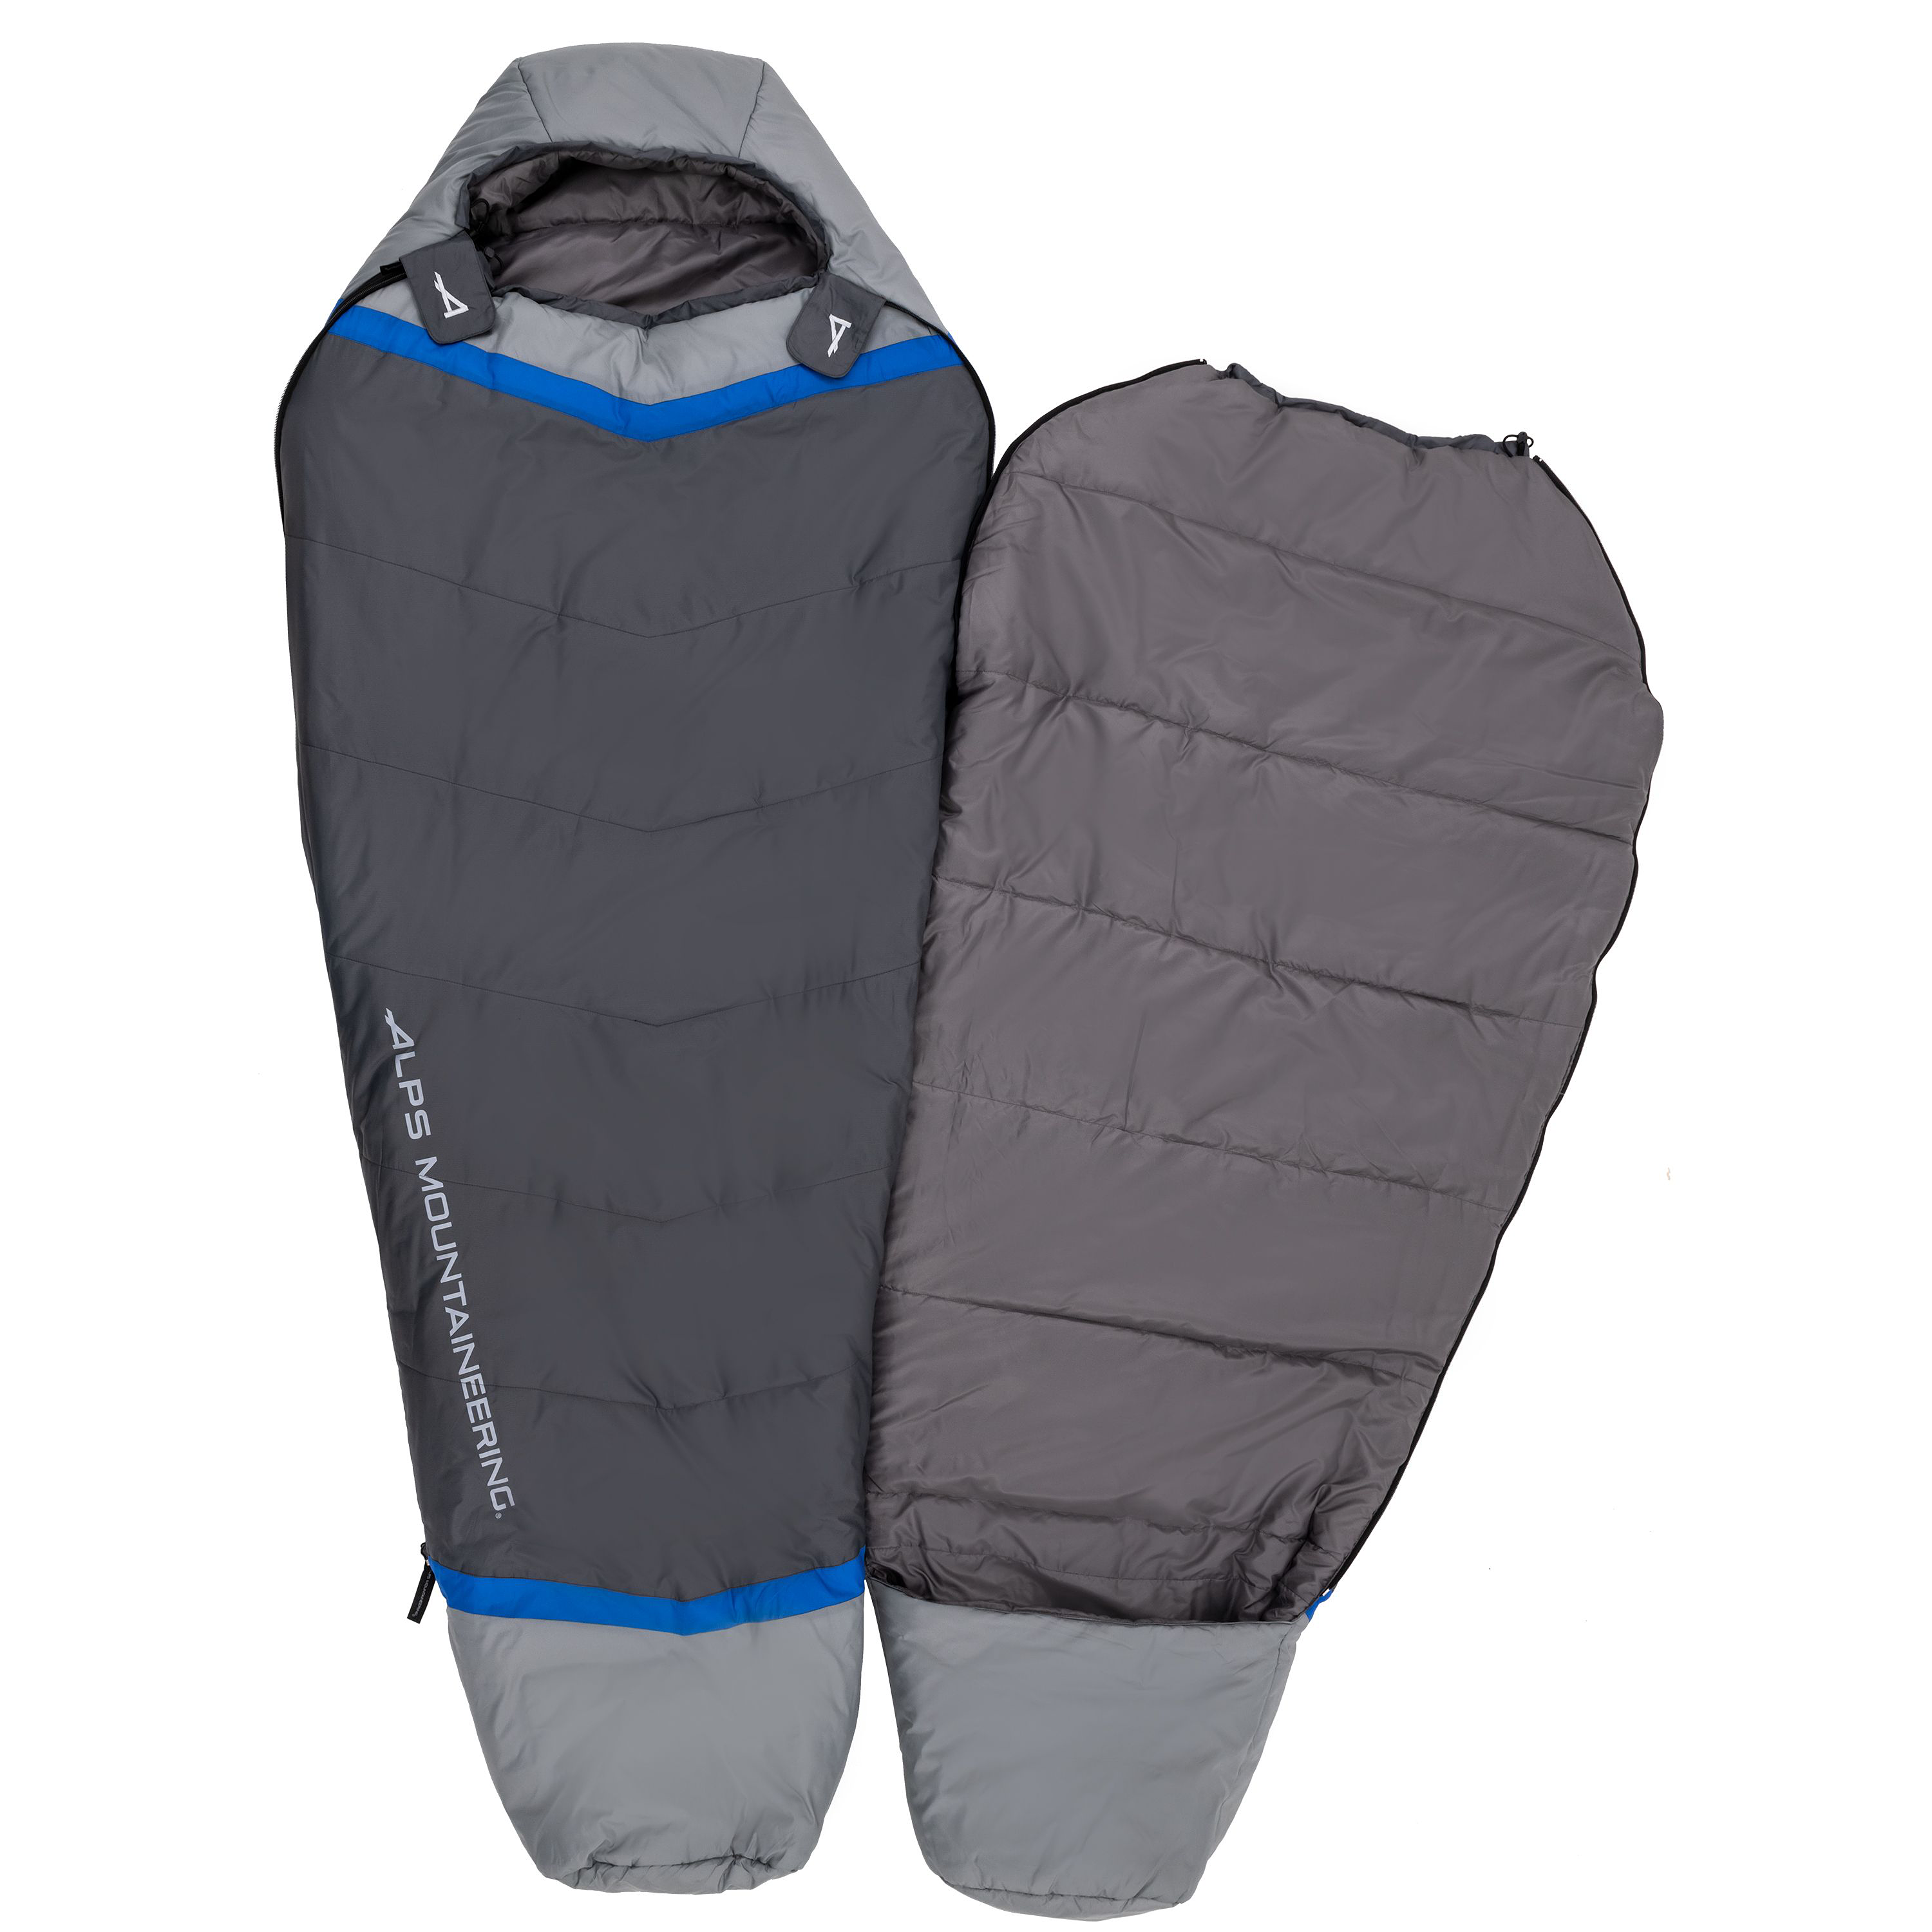 Alps Mountaineering Aura 30F/15F Mummy Sleeping Bag System